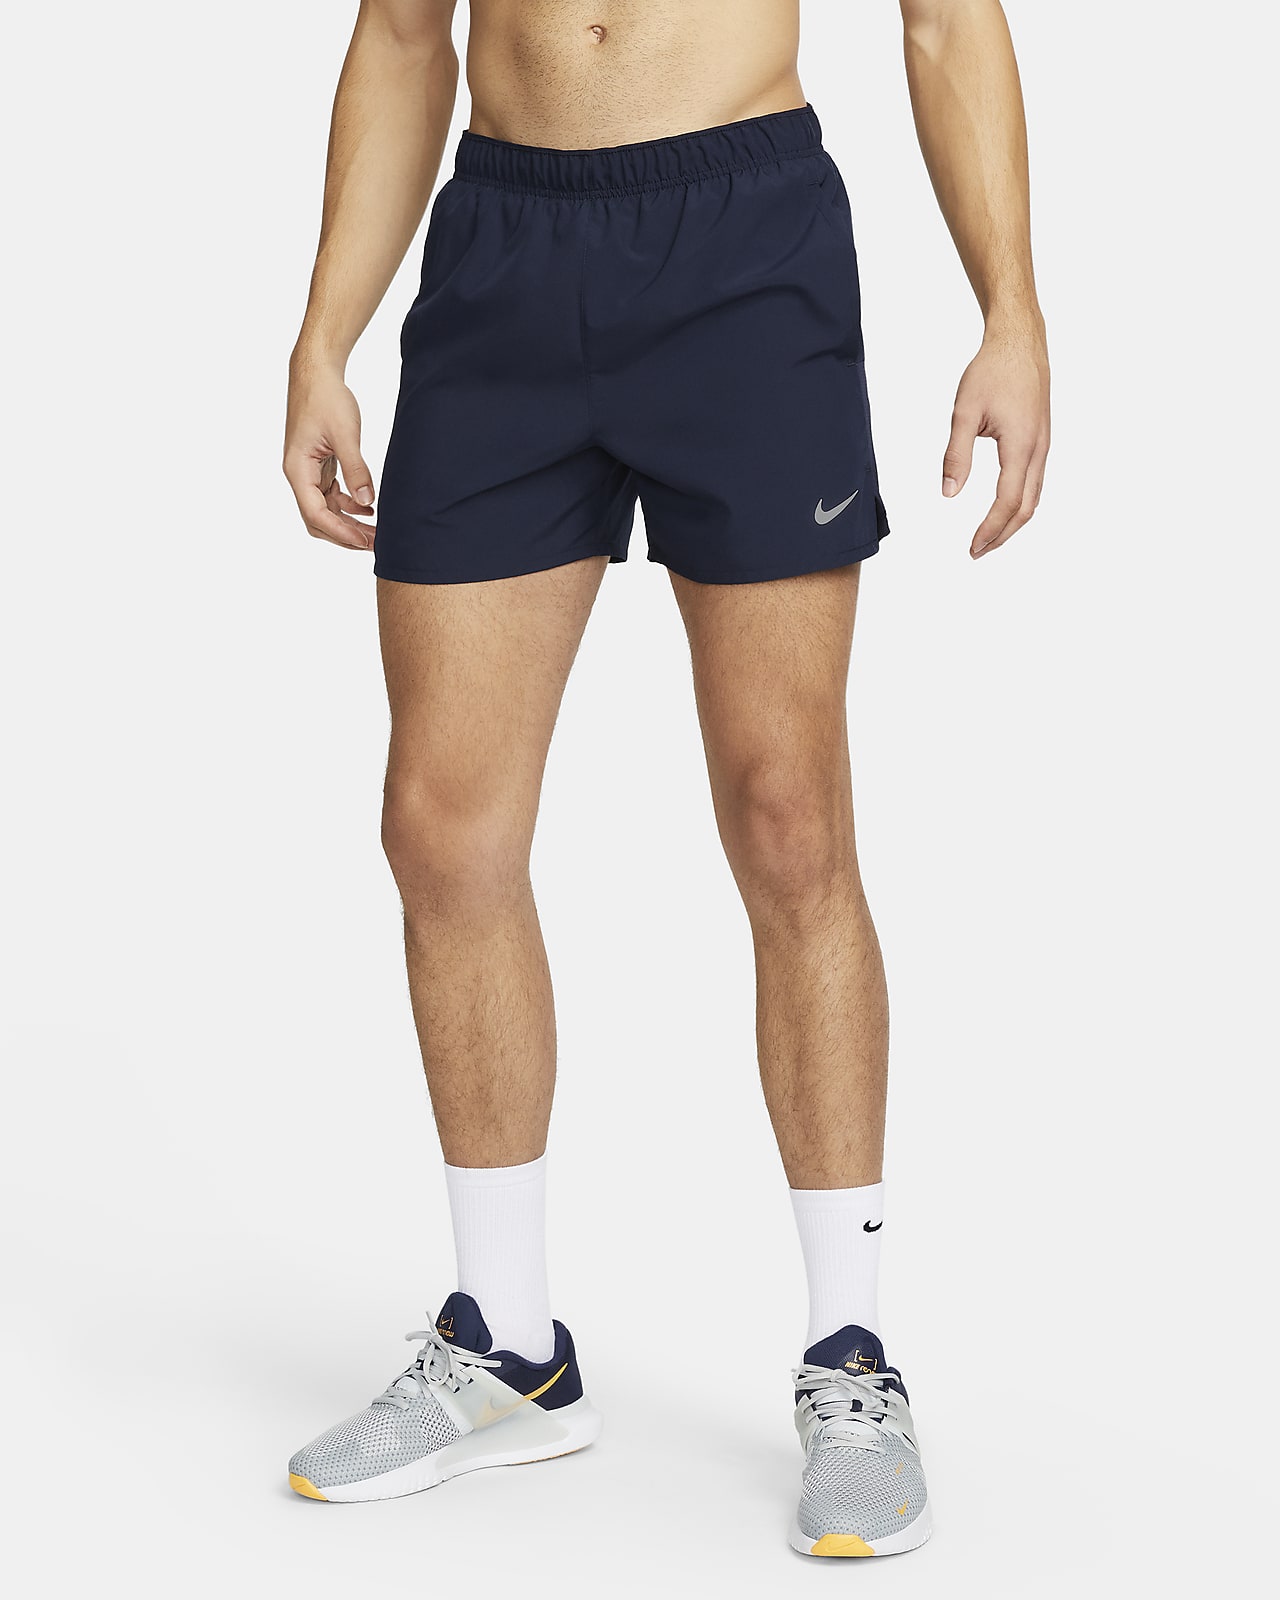 Nike Challenger Pantalons curts Dri-FIT amb eslip incorporat de 13 cm de running - Home